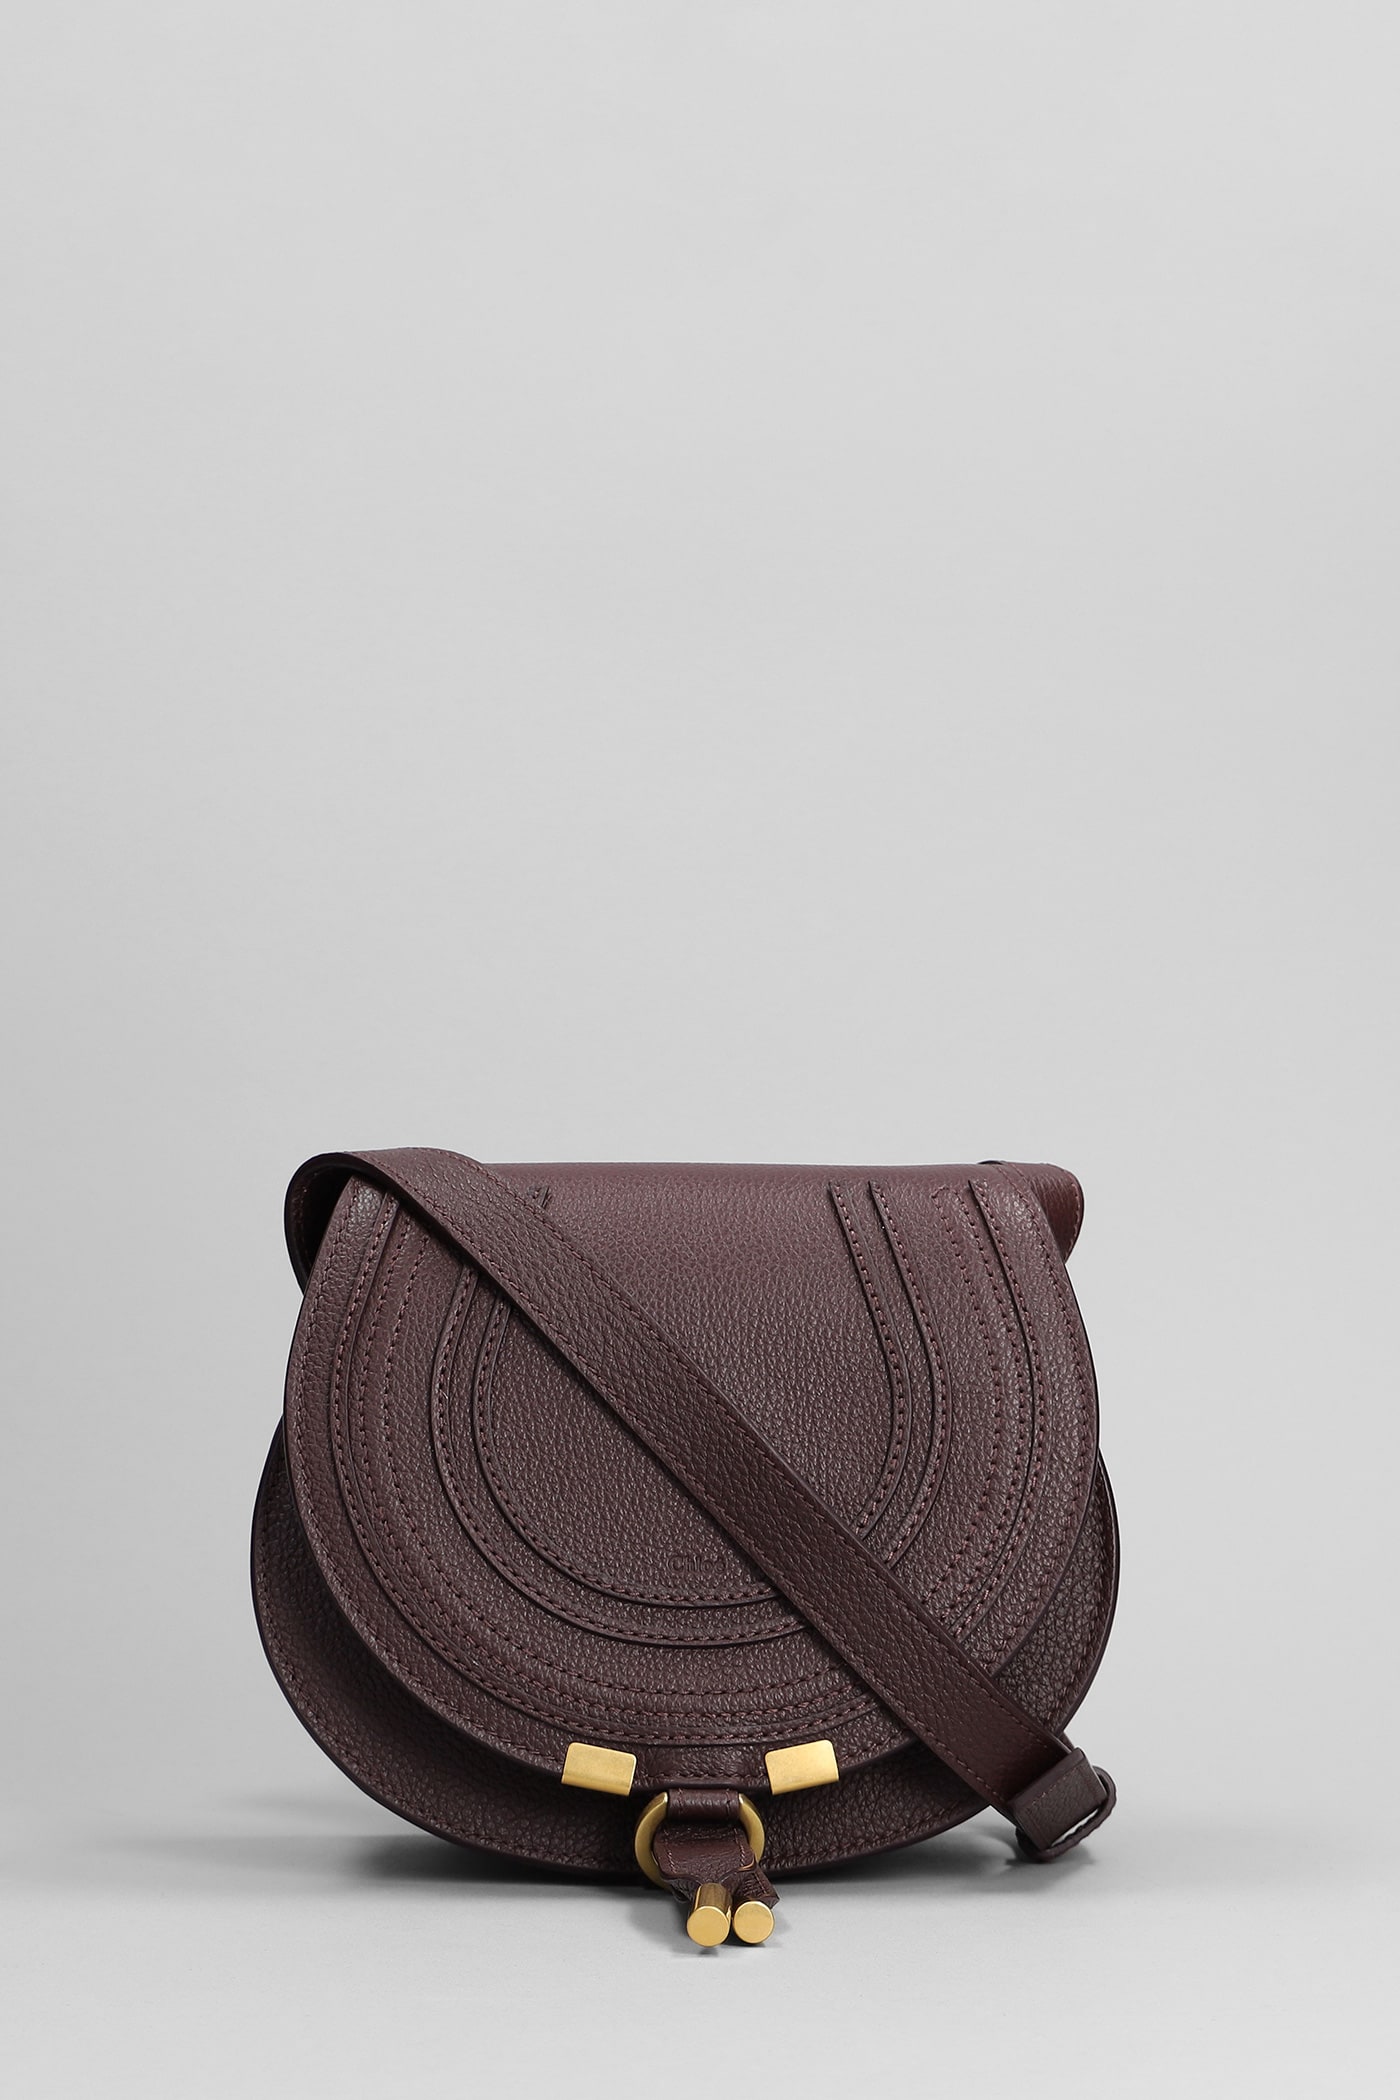 Chloé Mercie Small Shoulder Bag In Viola Leather